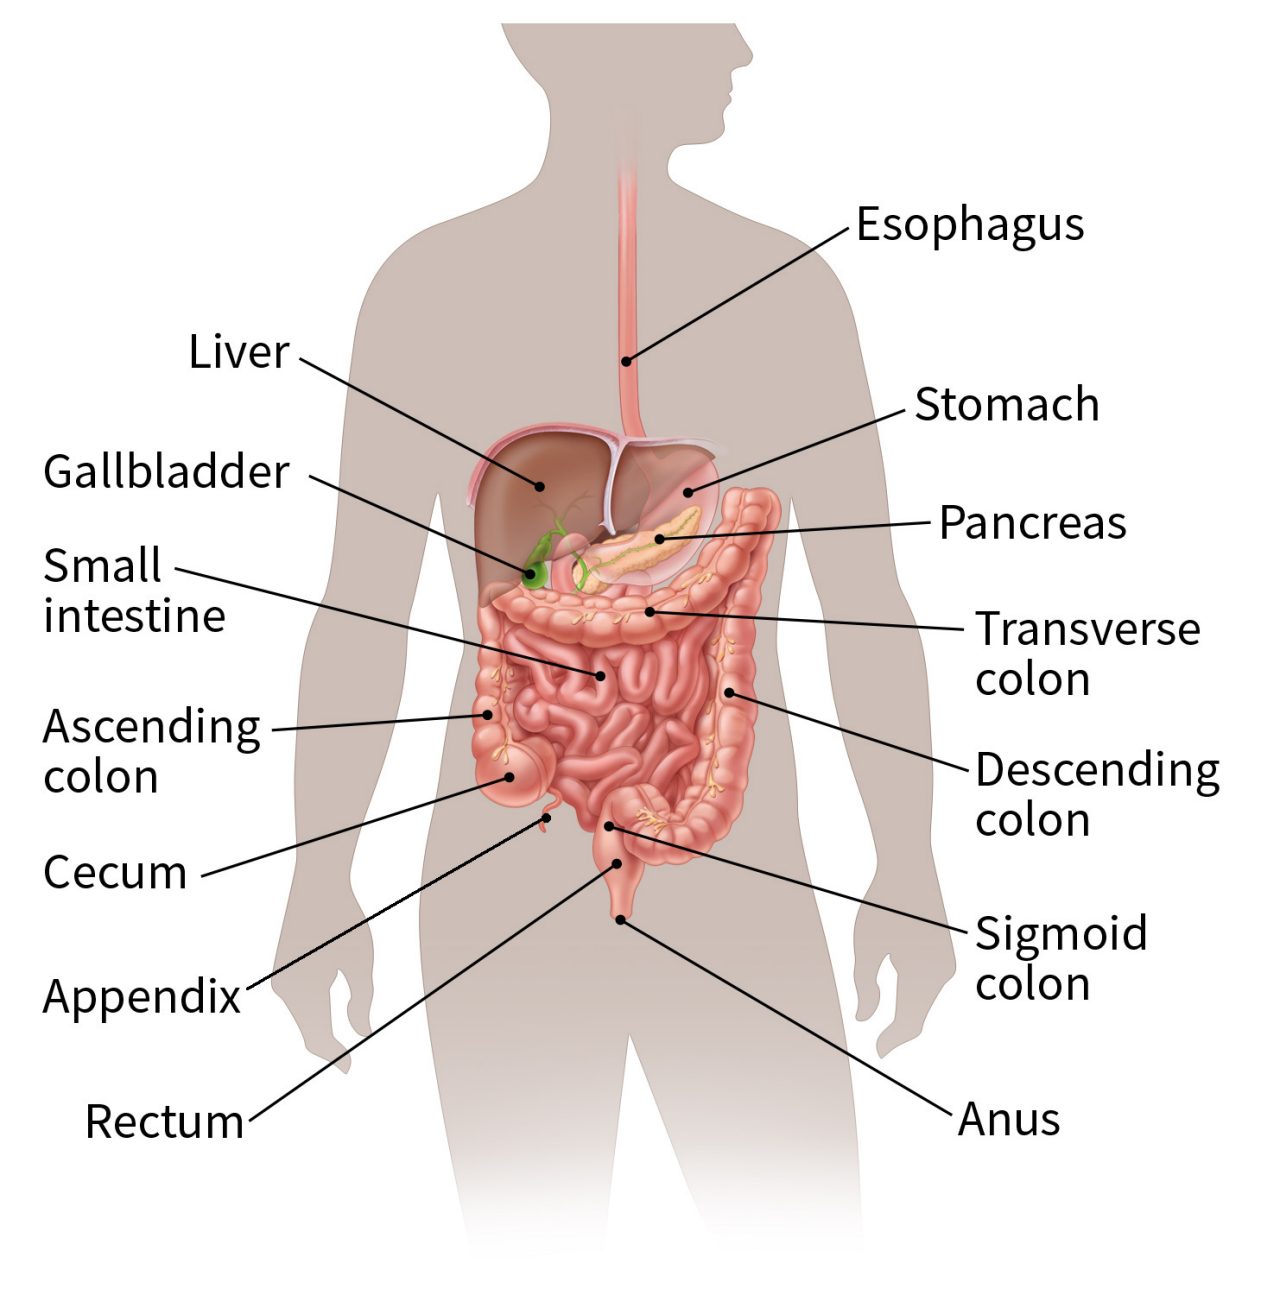 color illustration of the digestive system which shows the location of the esophagus, stomach, pancreas, transverse colon, descending colon, sigmoid colon, anus, rectum, appendix, cecum, ascending colon, small intestine, gallbladder and liver